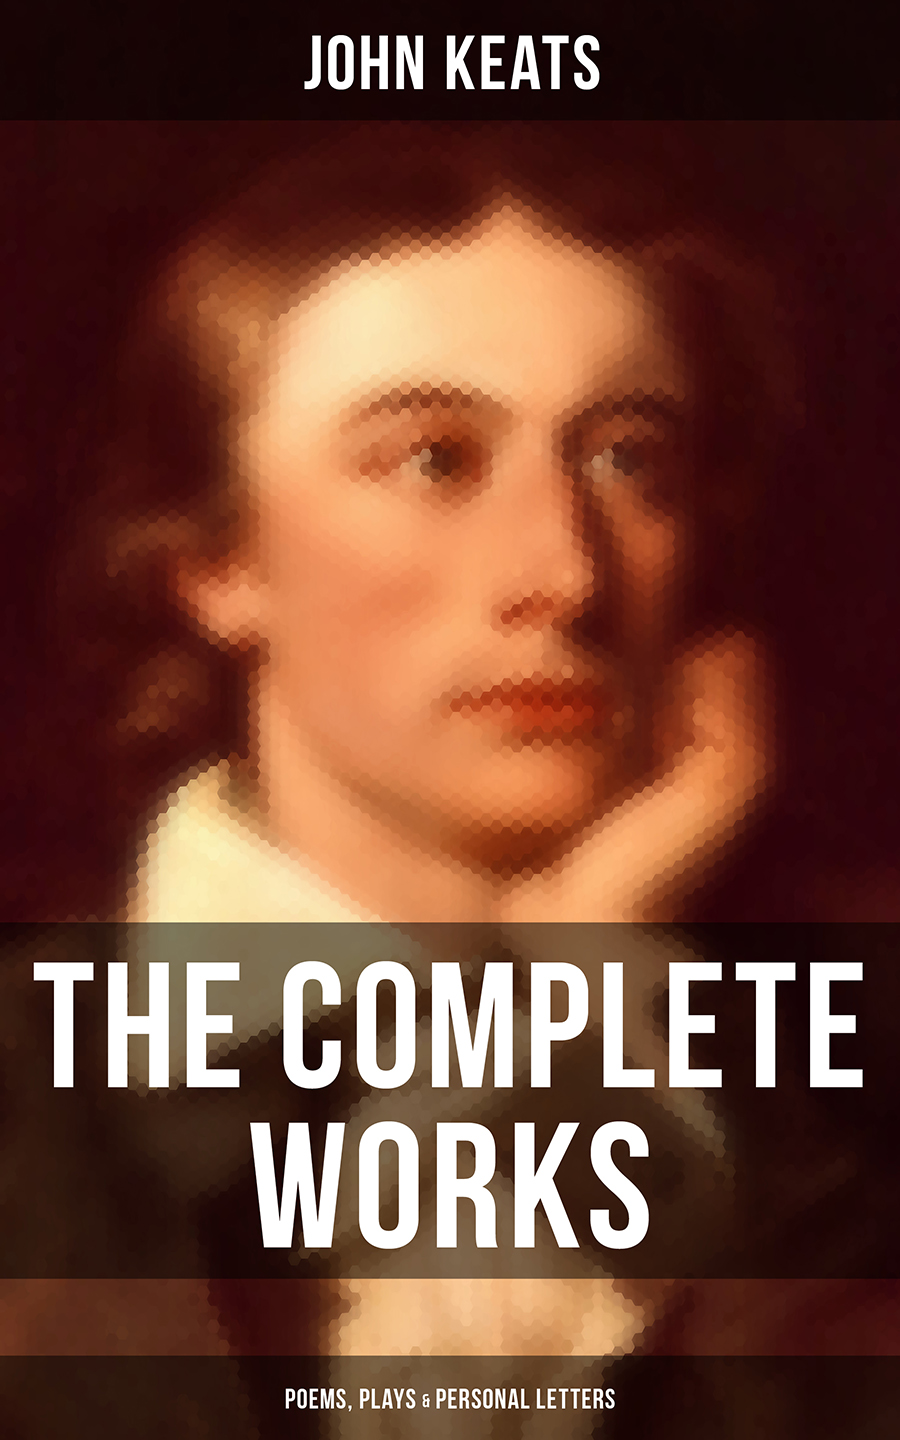 essay on john keats by matthew arnold